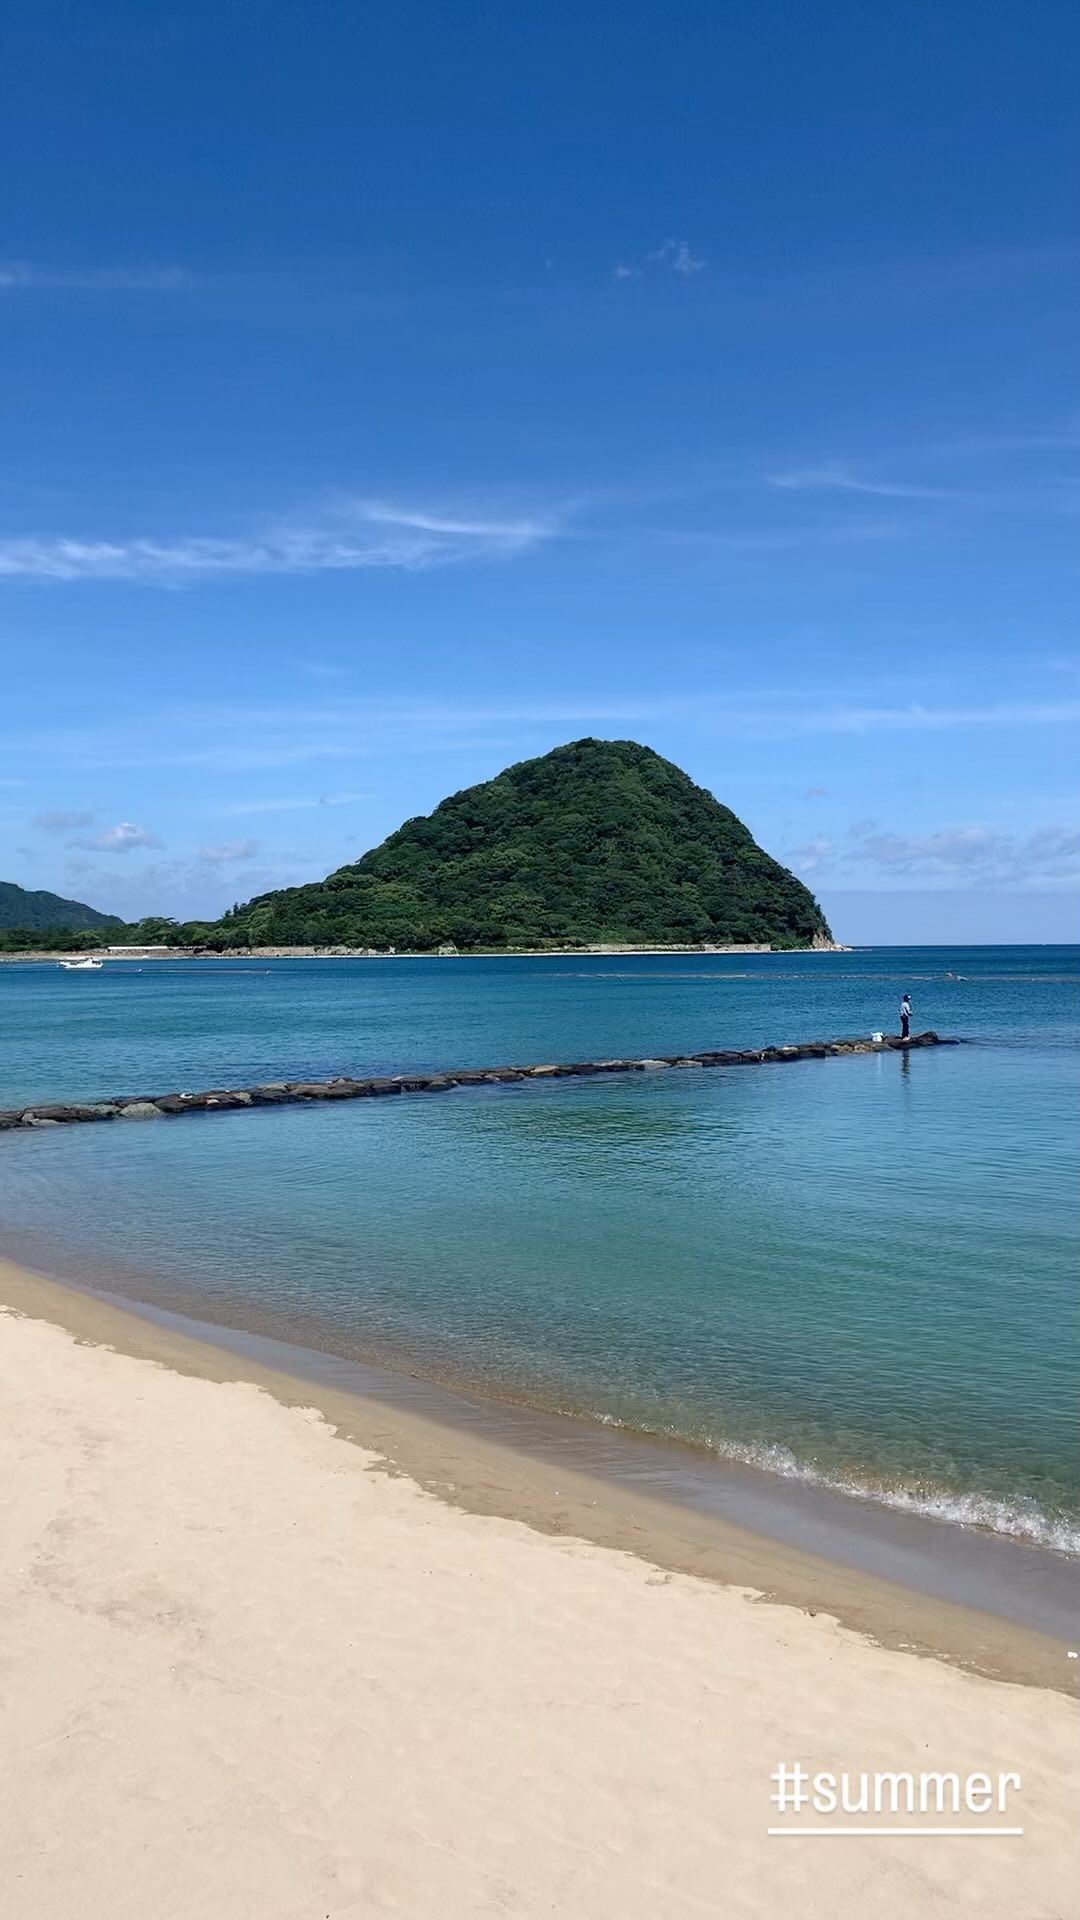 #japan 
#summer  夏到来ですね💦  今日の菊が浜は
海も空も澄んだブルーで穏やかな様子です。  東京から移住して11年目の夏。  相変わらず泳げませんが
毎年「菊が浜」での海水浴は欠かせません。  道産子なので暑さには弱いワタシも
「移住して良かった〜」と感じる景色です♡  #plantbased #lifestyle #healthy #beach 
#seaofjapan #sea #japantravel #yamaguchi 
#shojinstyle 
#夏 #海 #日本海 #萩市 #海水浴 #白い砂浜 
#季節を楽しむ #季節を感じる暮らし #波の音 
#移住 #iターン #田舎暮らし #古民家暮らし 
#精進スタイル #夏休み